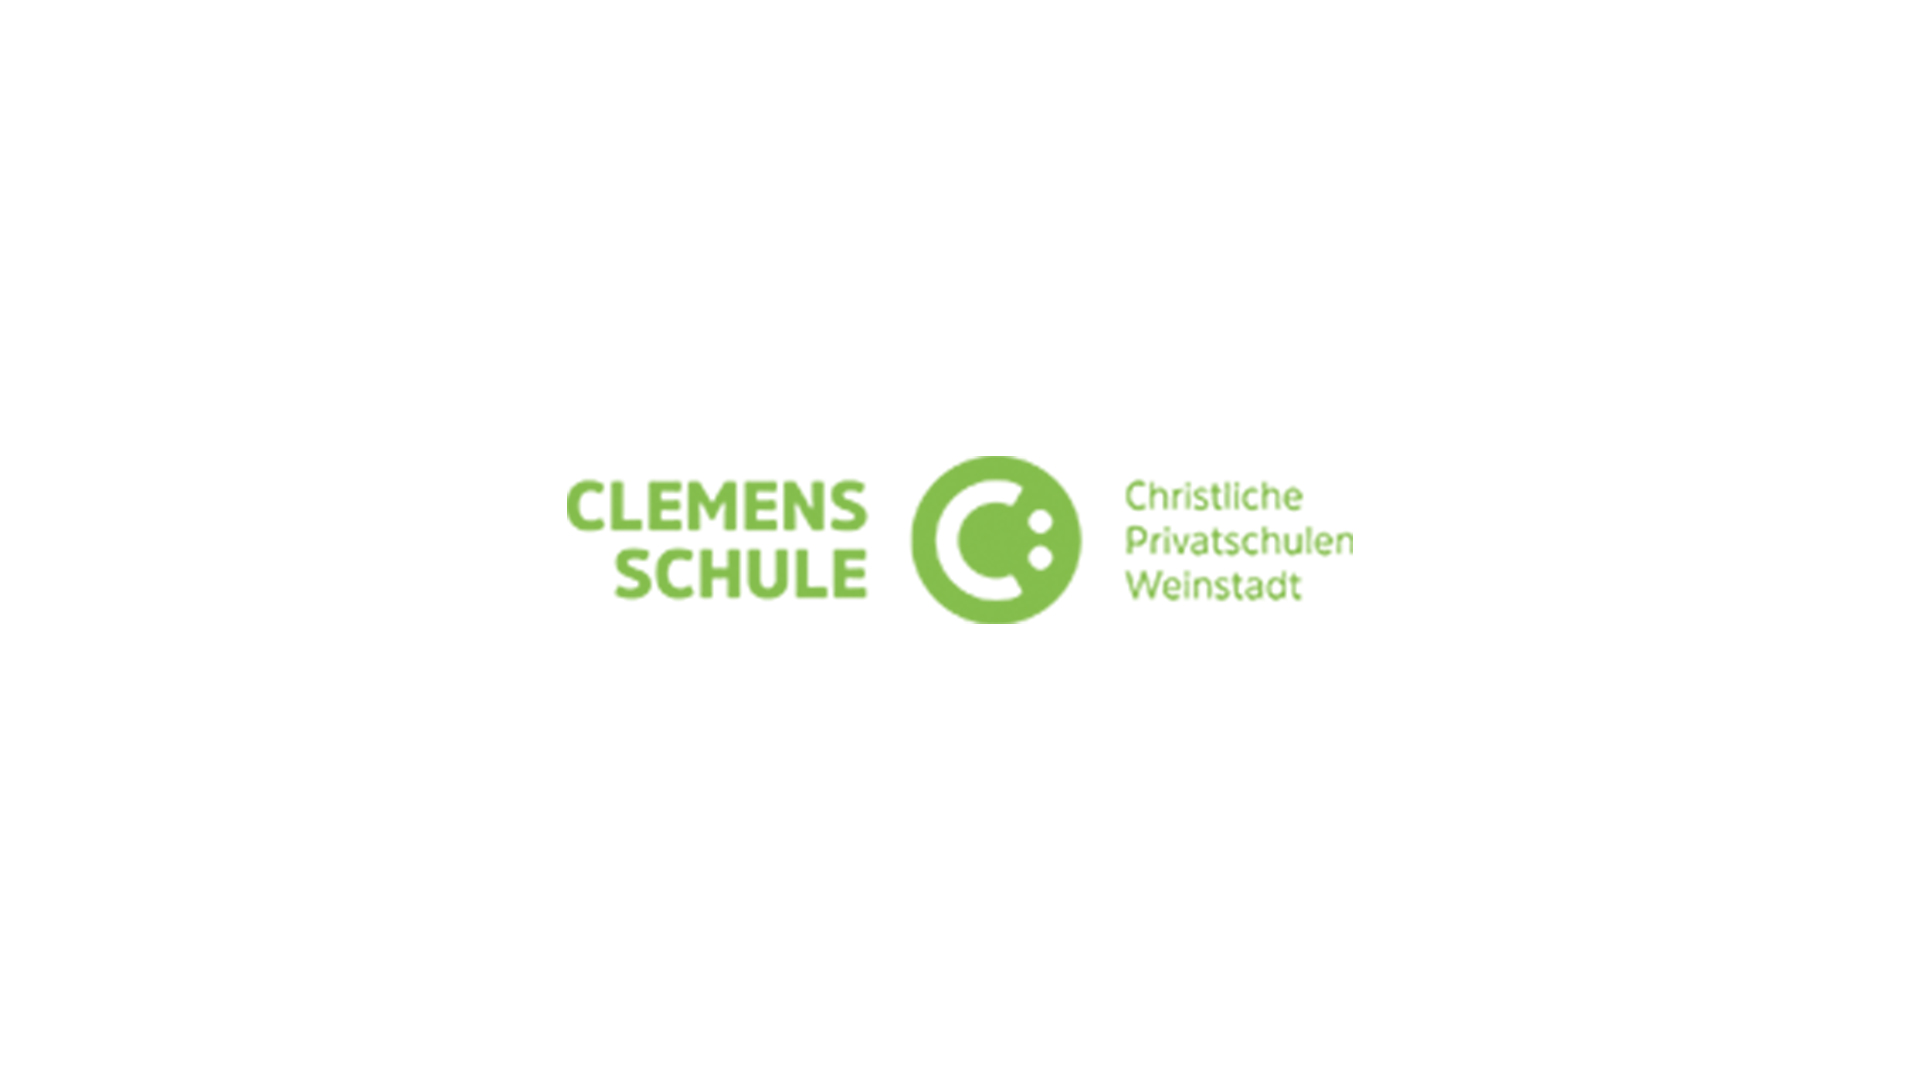 Pfleiderer Projektbau: Sponsoring Clemens Schule